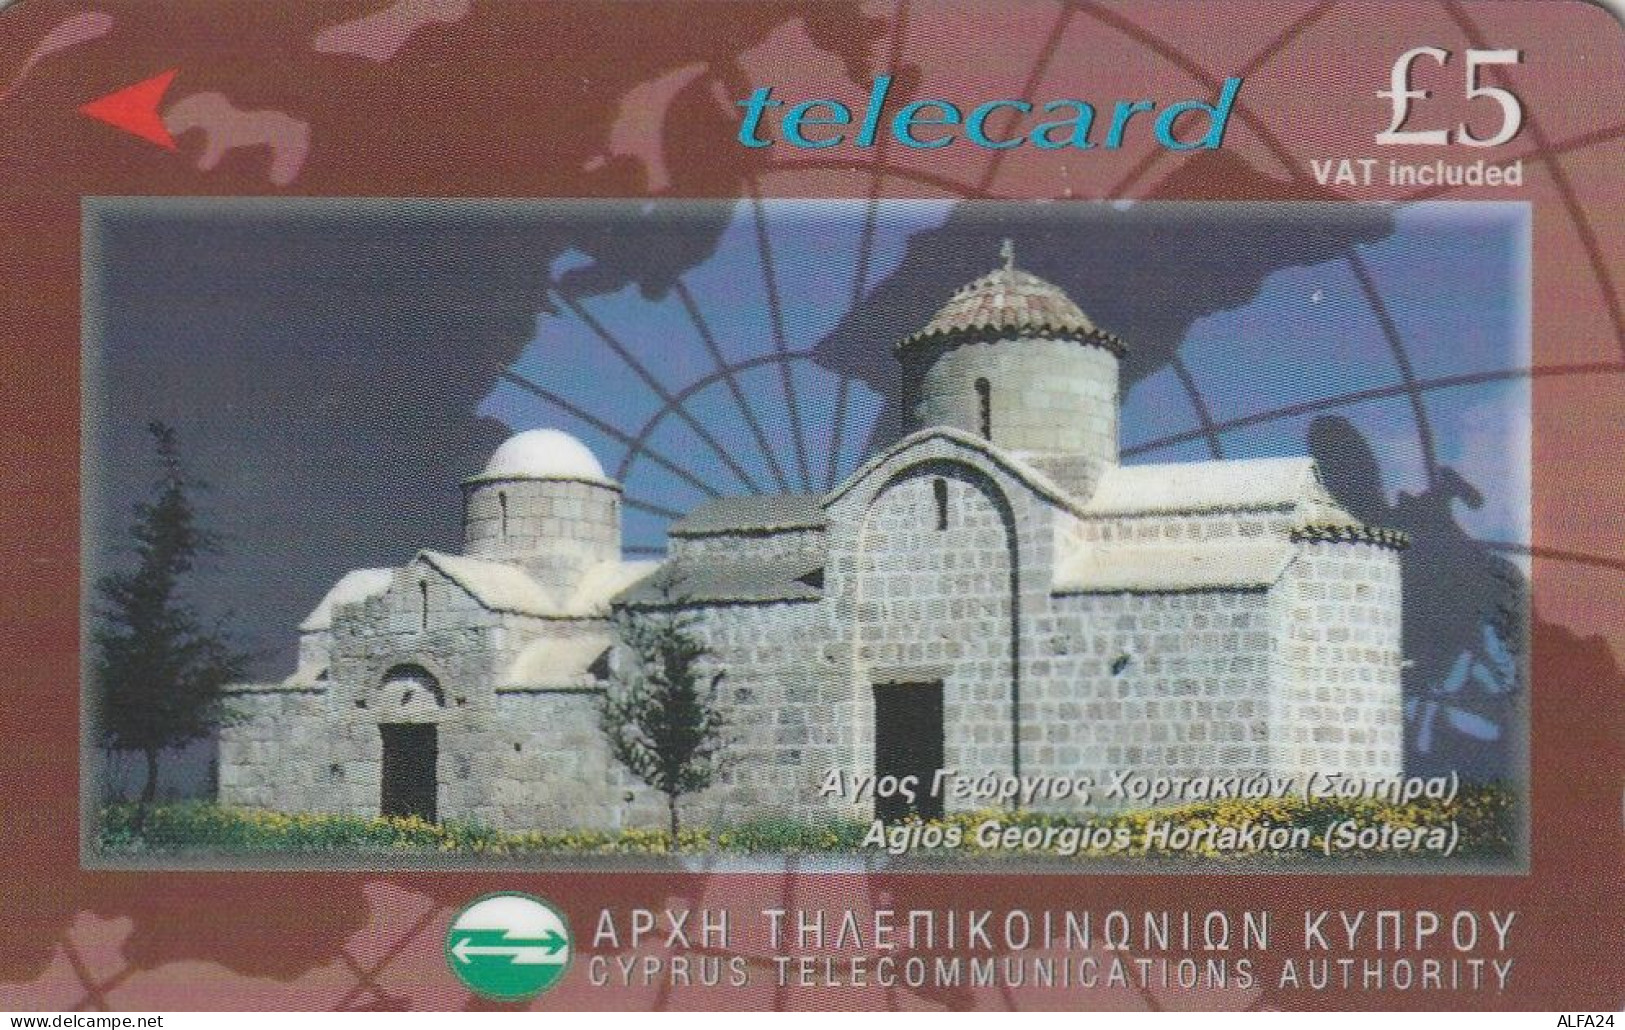 PHONE CARD CIPRO  (CZ1157 - Cyprus